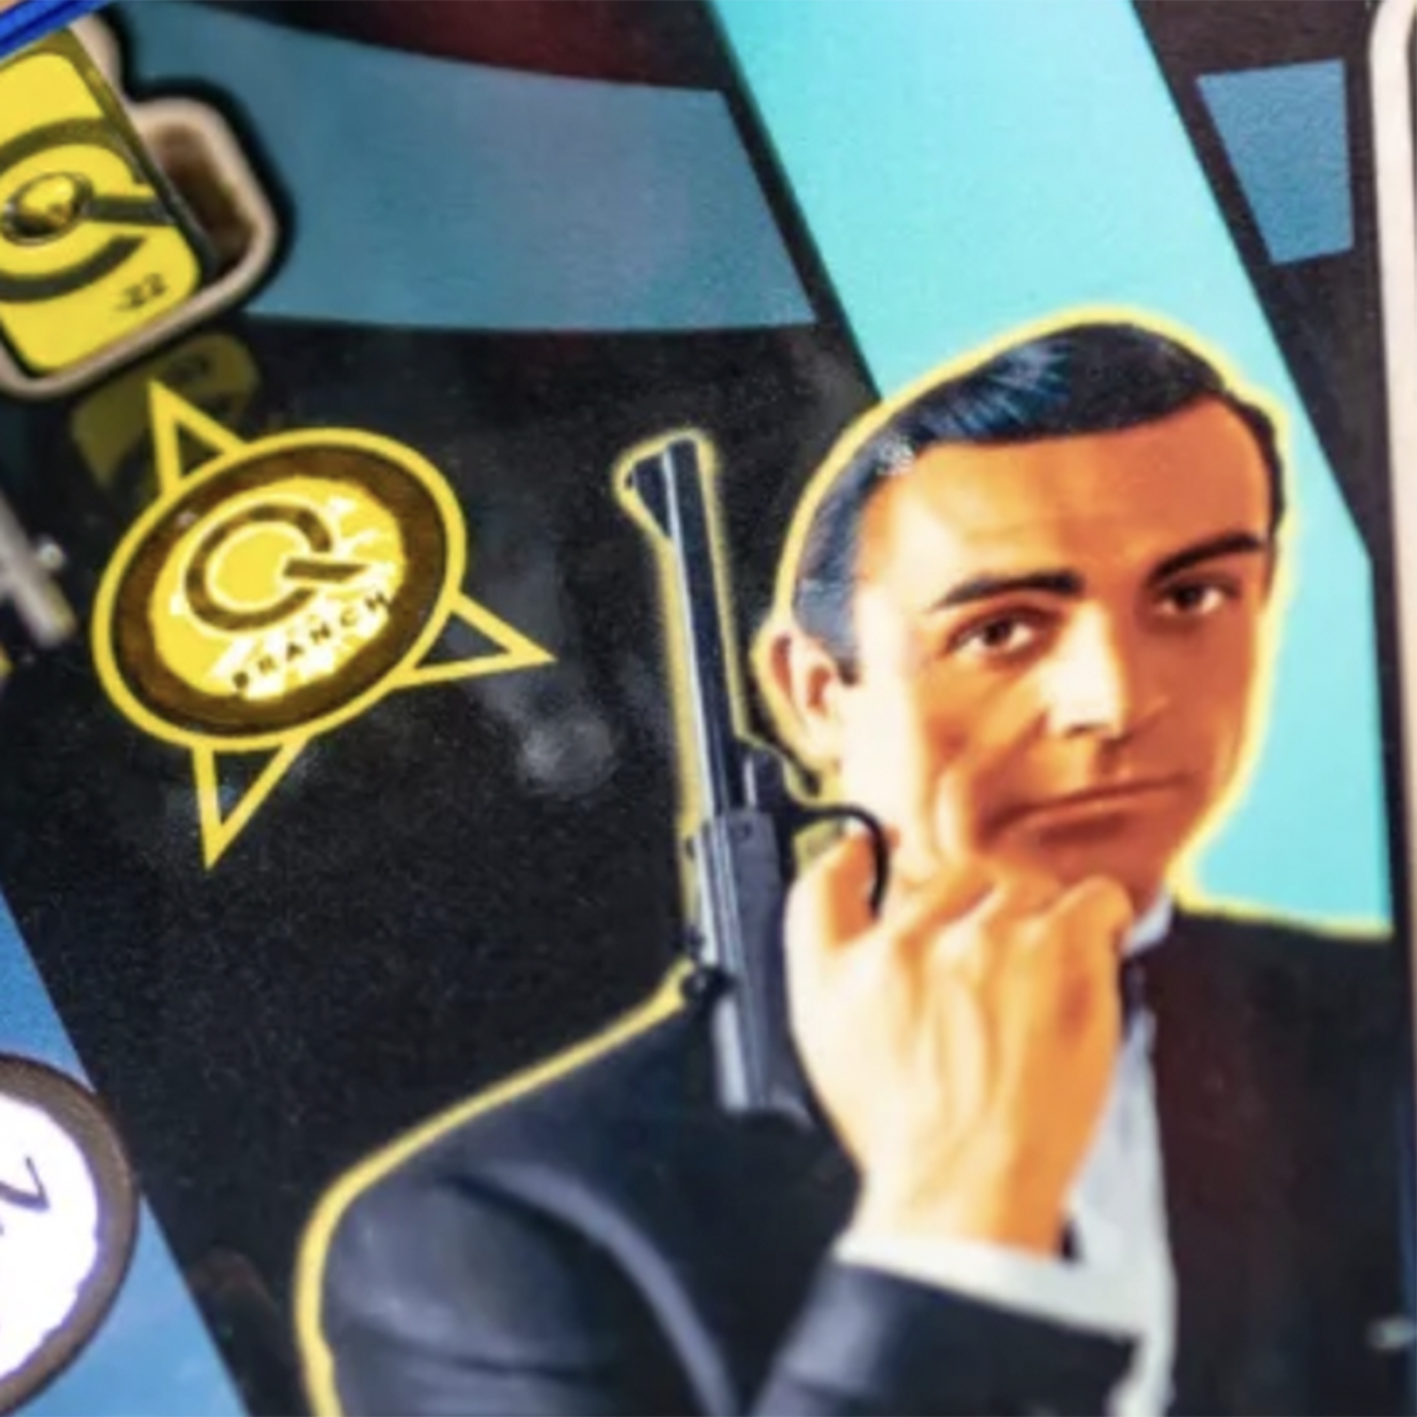 2023 60th Anniversary James Bond Limited Edition Pinball Machine by Stern